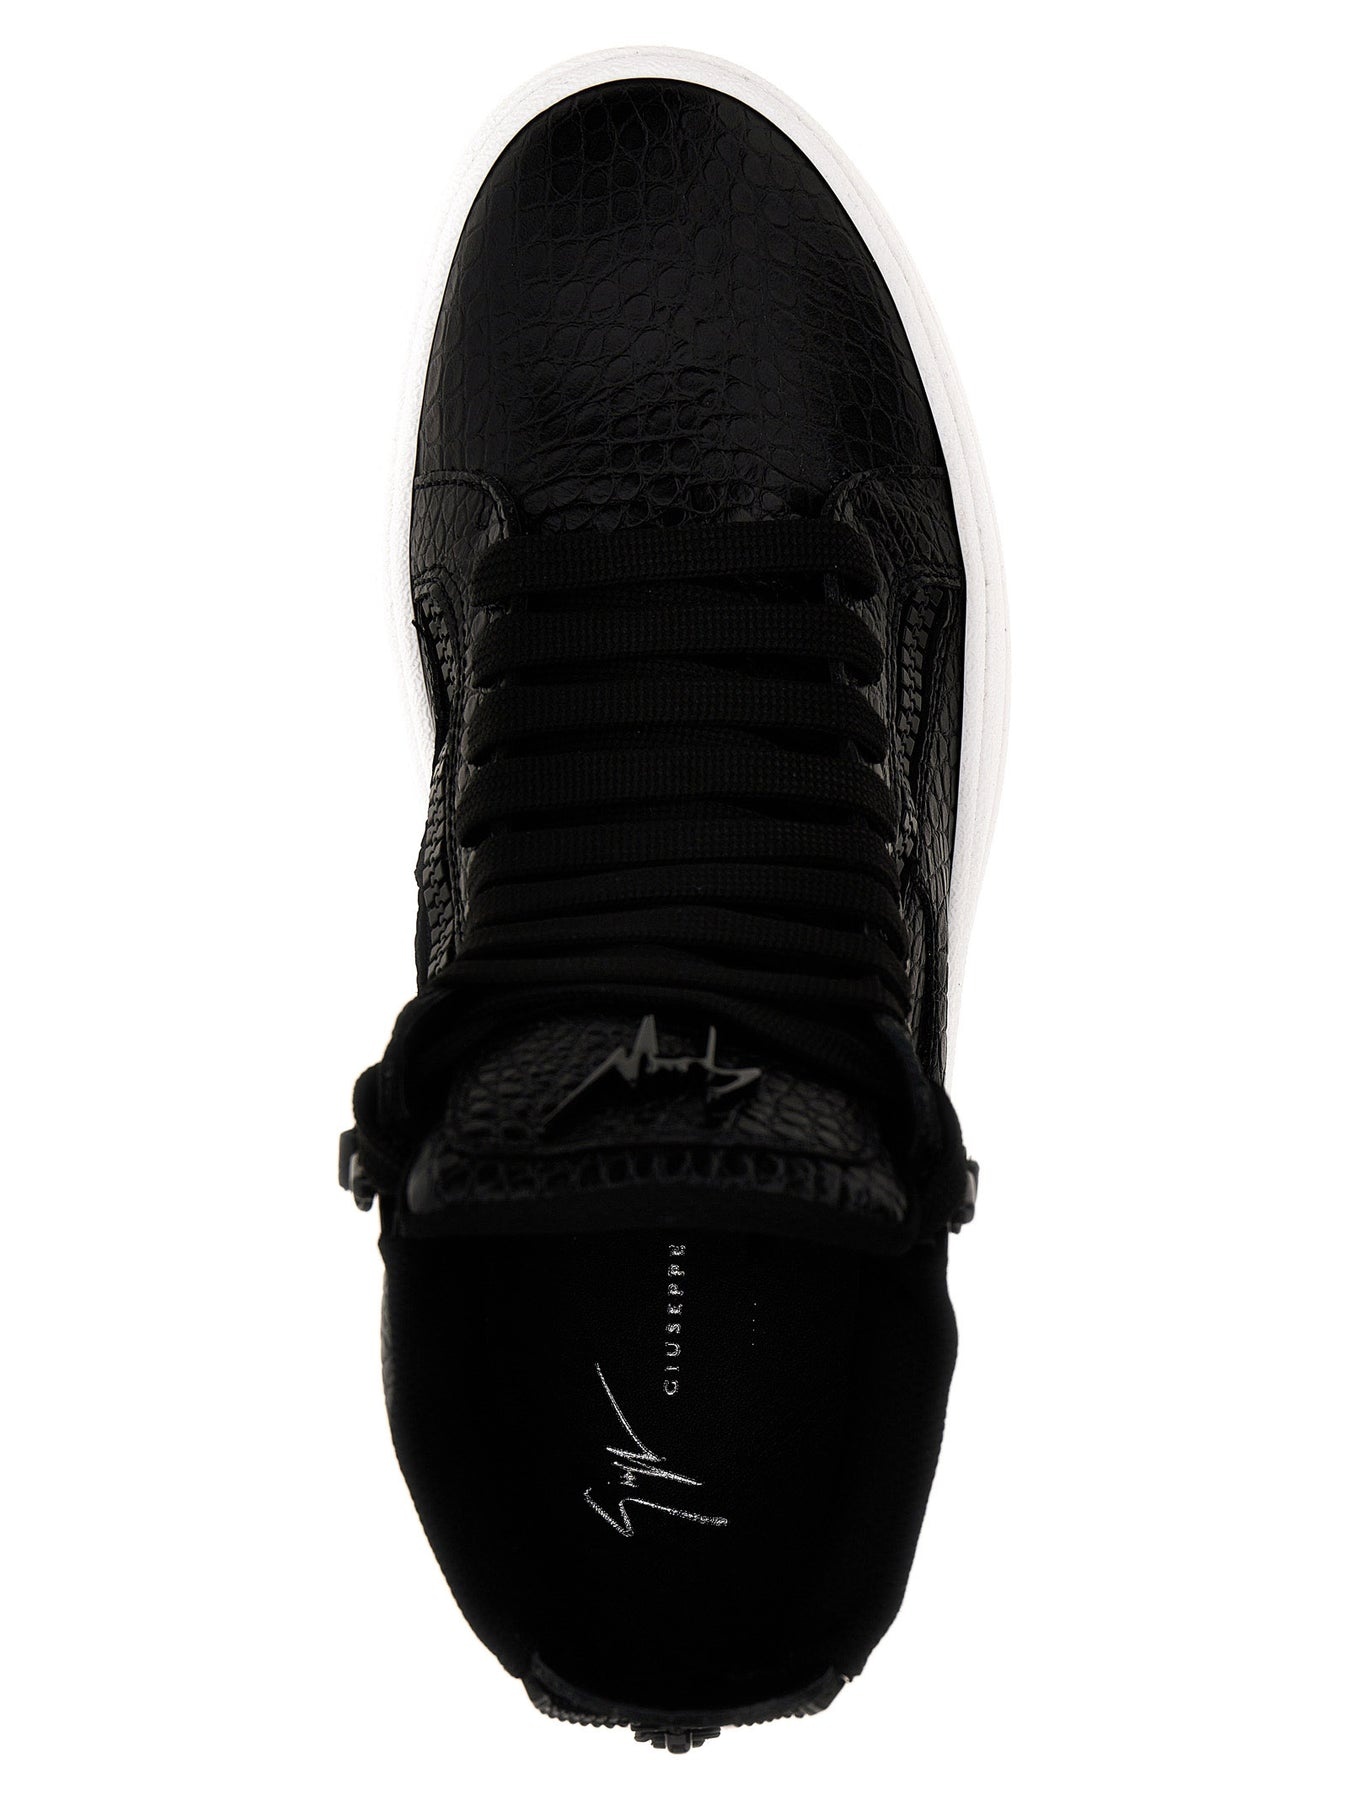 Gz/94 Sneakers White/Black - 3